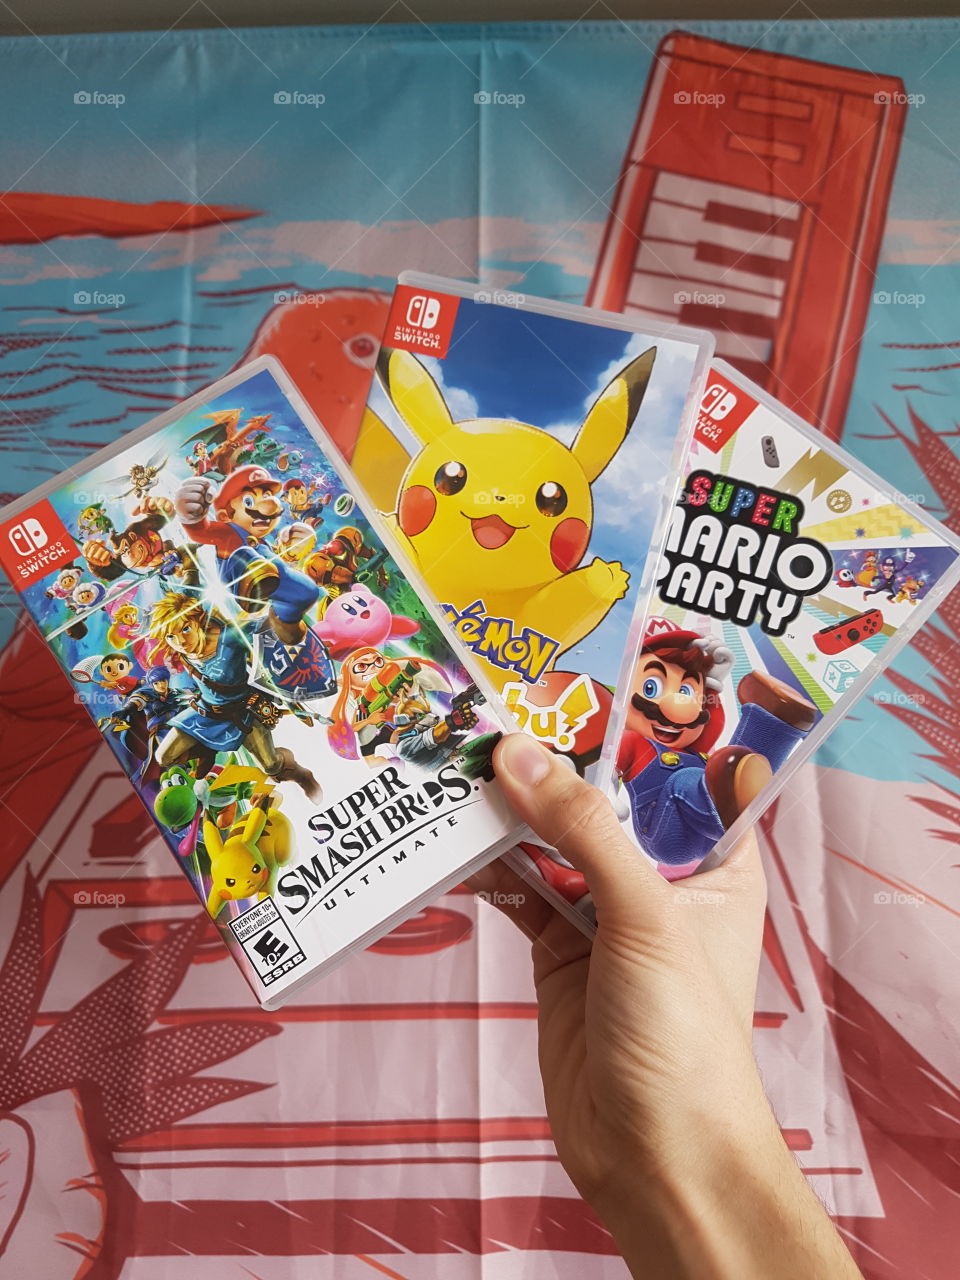 Nintendo Switch games (Pokemon, Super Smash bros, Super Mario Party)